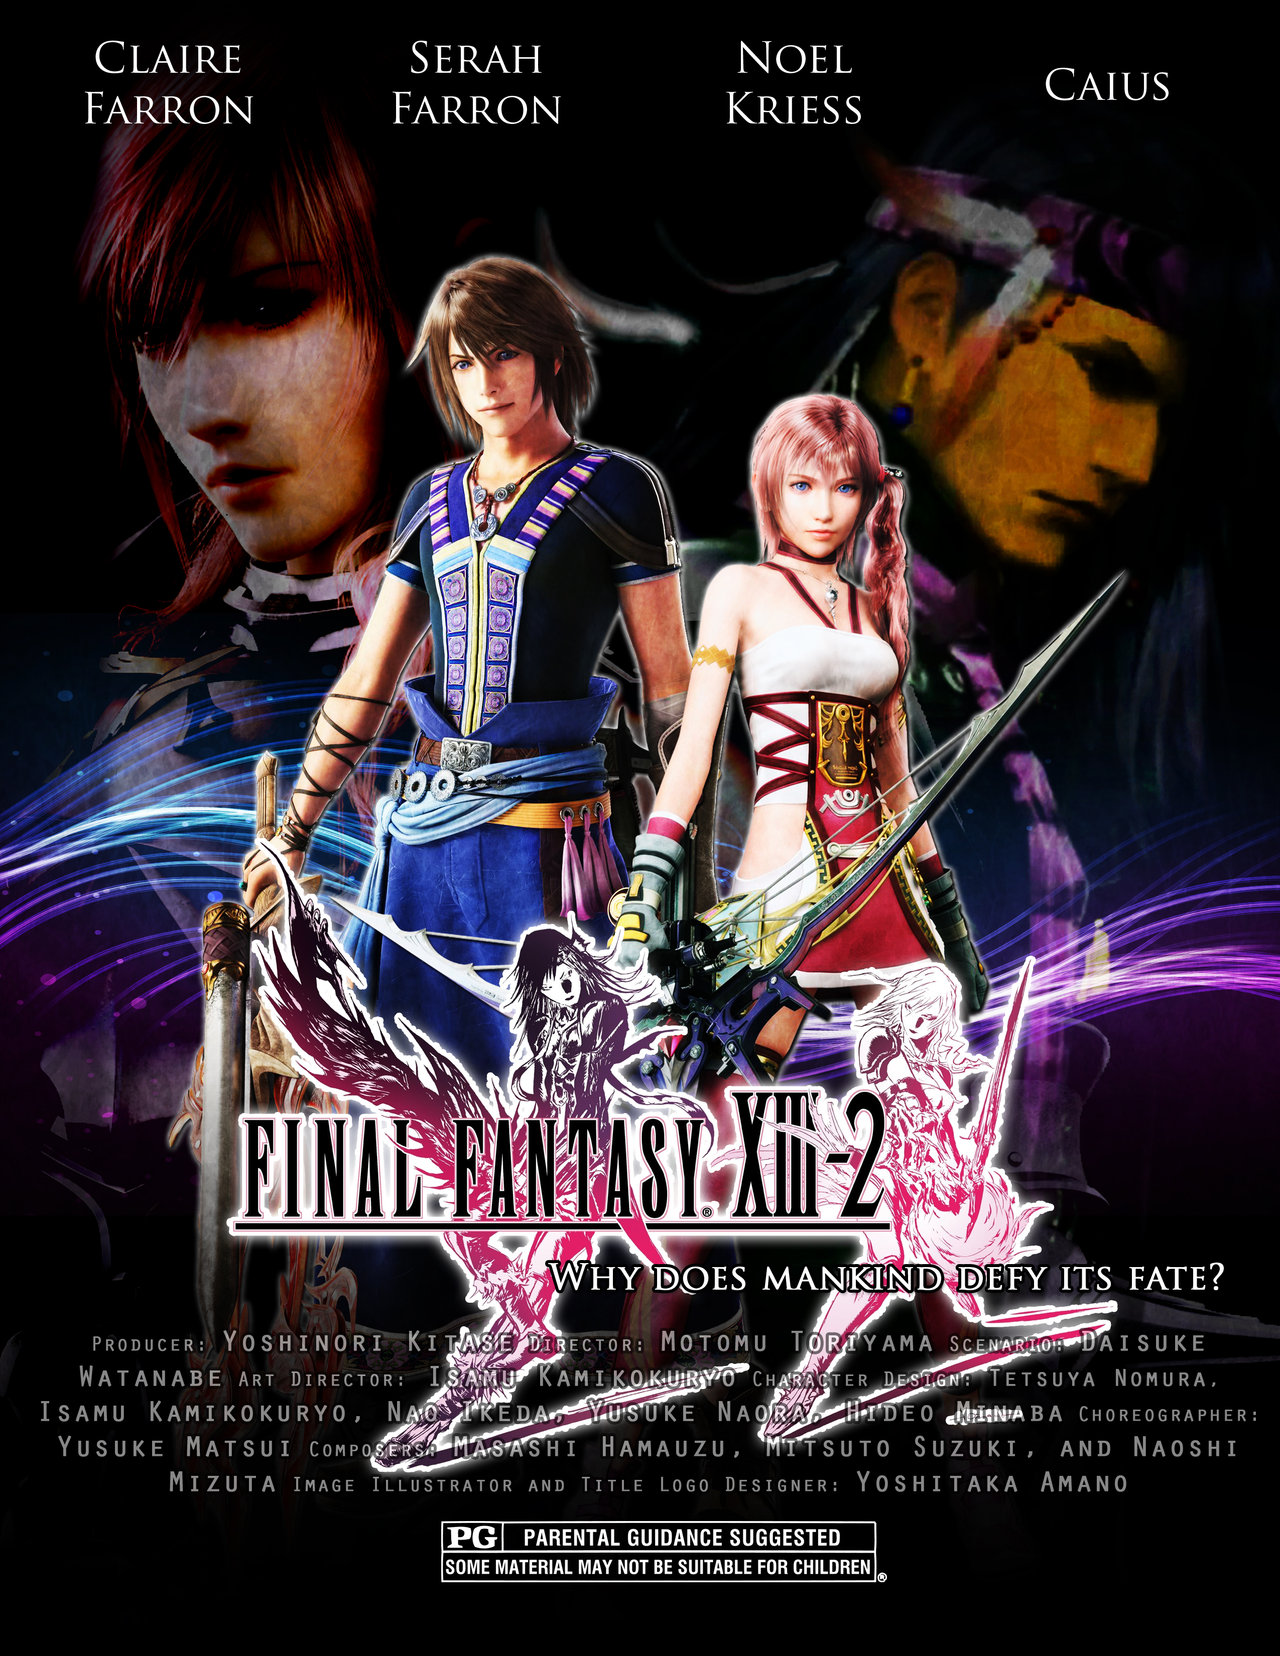 Final Fantasy XIII-2 - Final Fantasy XIII 2